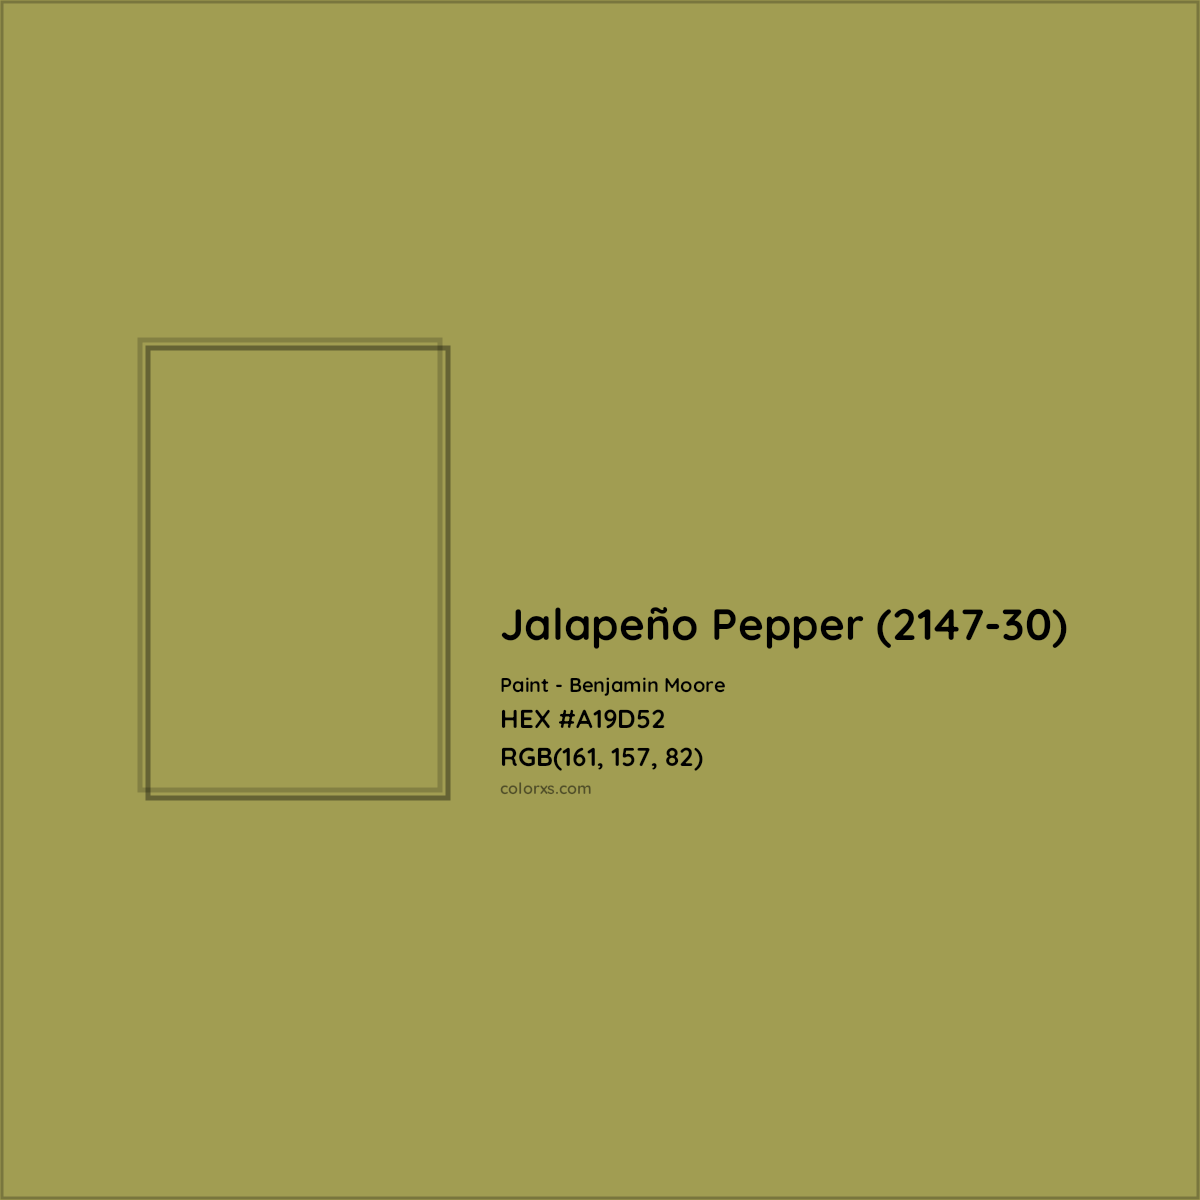 HEX #A19D52 Jalapeño Pepper (2147-30) Paint Benjamin Moore - Color Code